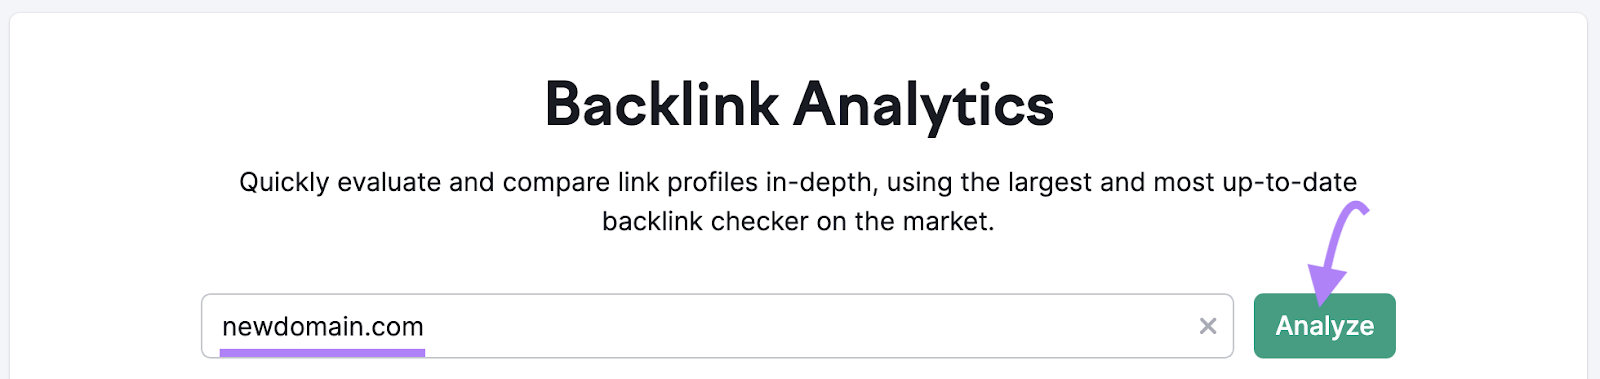 "newdomain.com" entered into Backlink Analytics tool